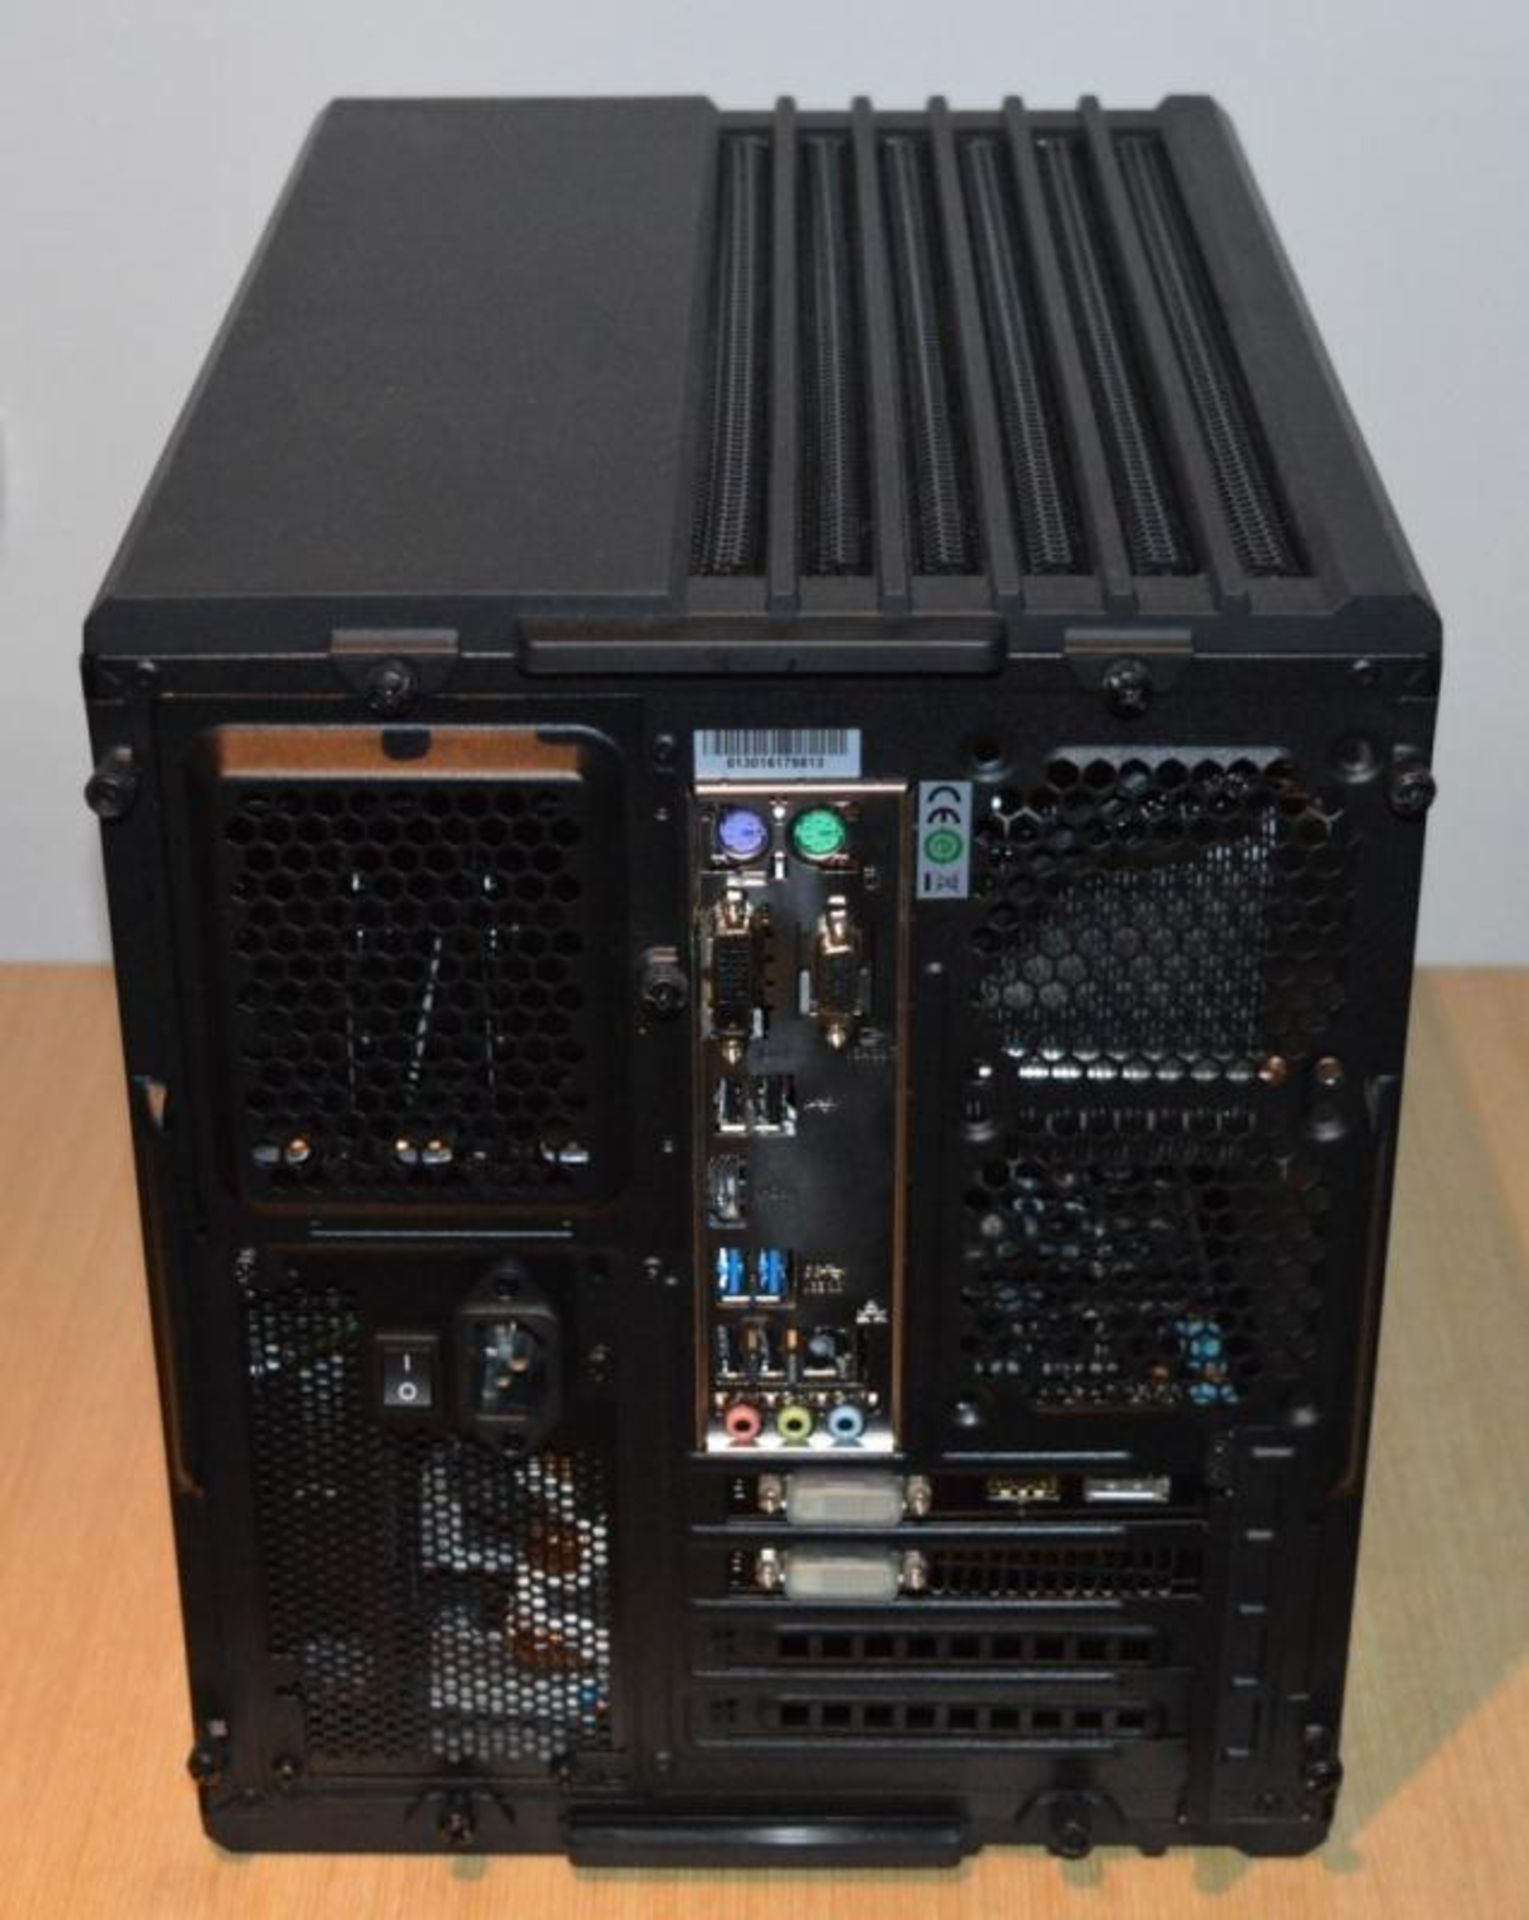 1 x Custom Built Desktop Computer - Features Latest Intel Skylake Processor, 8gb DDR4 Ram, 250gb SSD - Image 15 of 17